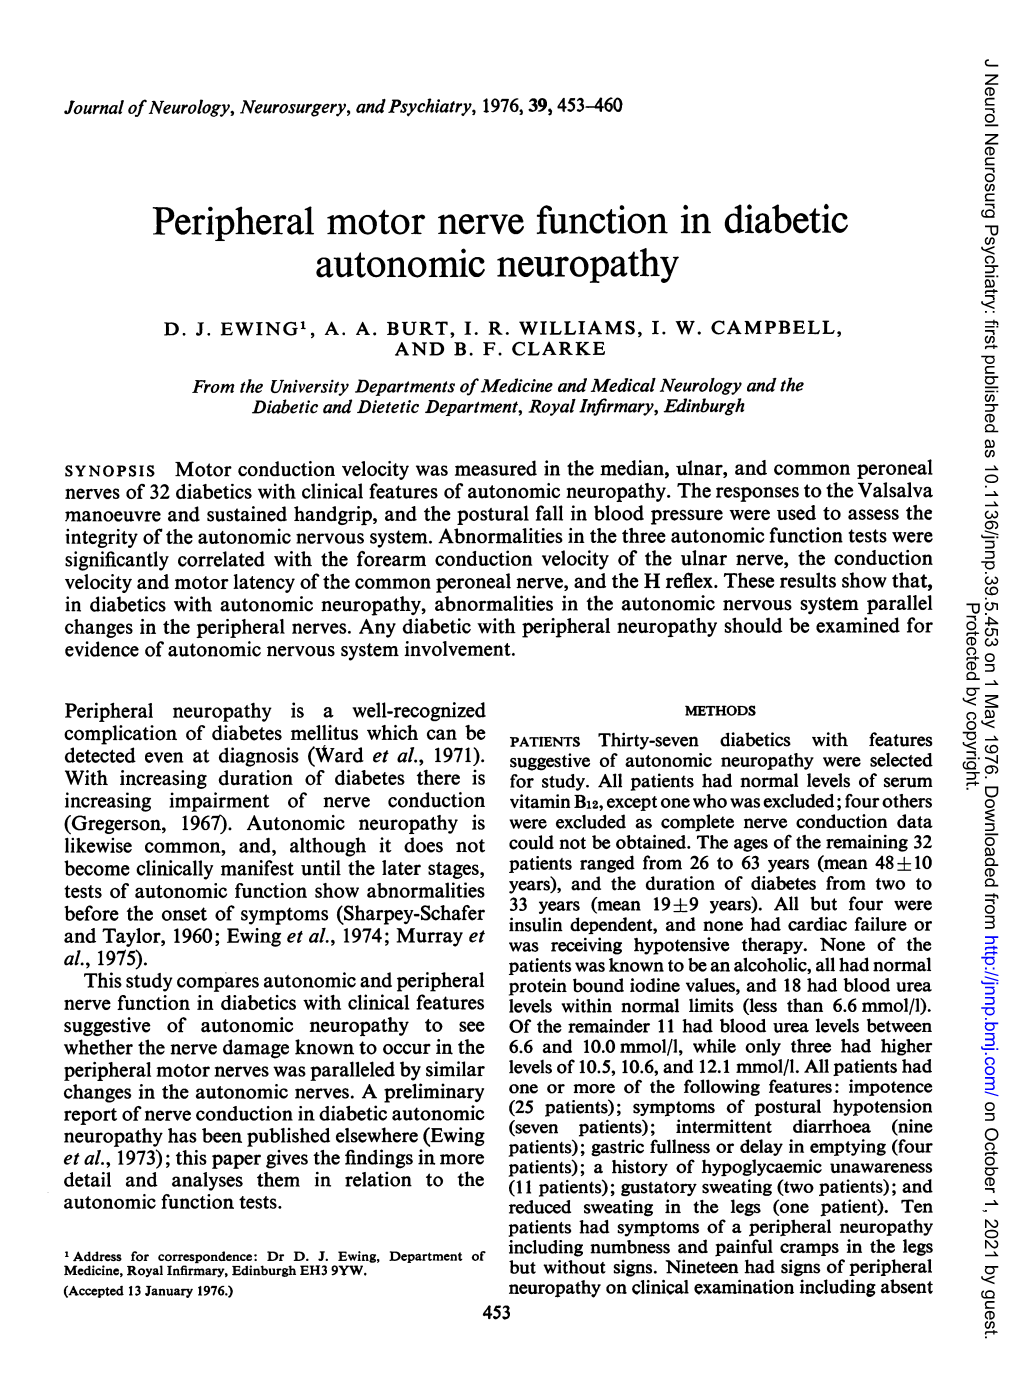 Peripheral Motor Nerve Function in Diabetic Autonomic Neuropathy